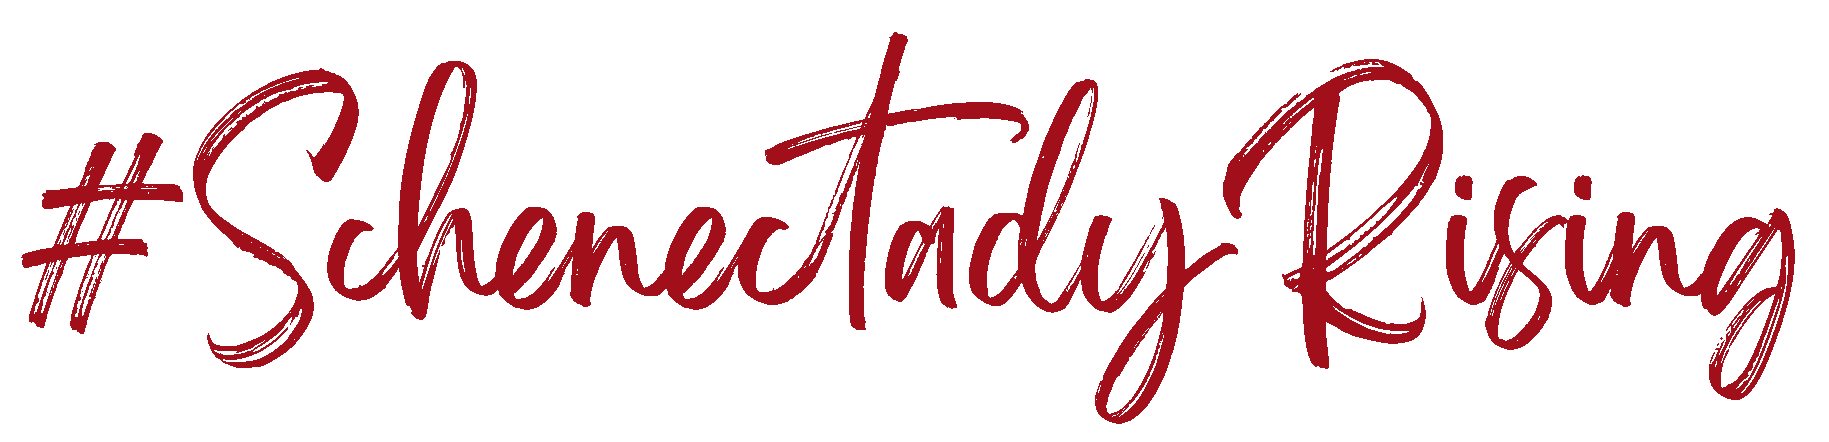 Schenectady Rising logo